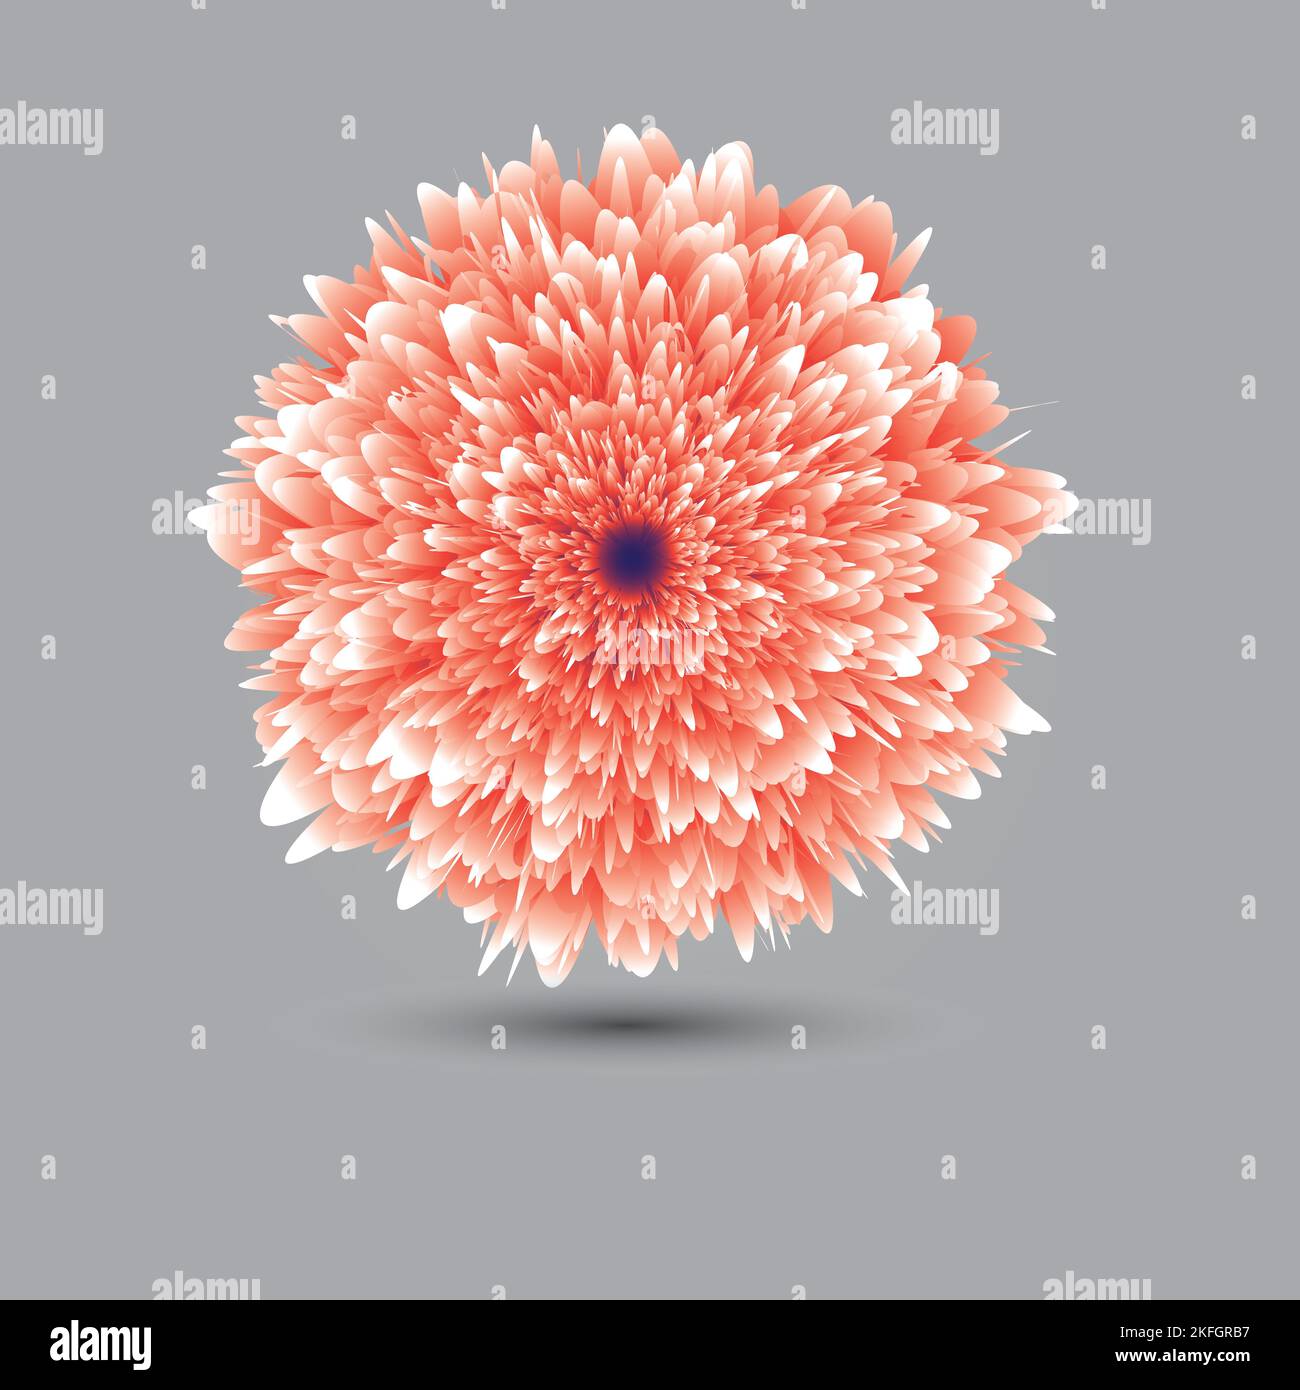 didacticiel adobe flower design illustrator Illustration de Vecteur